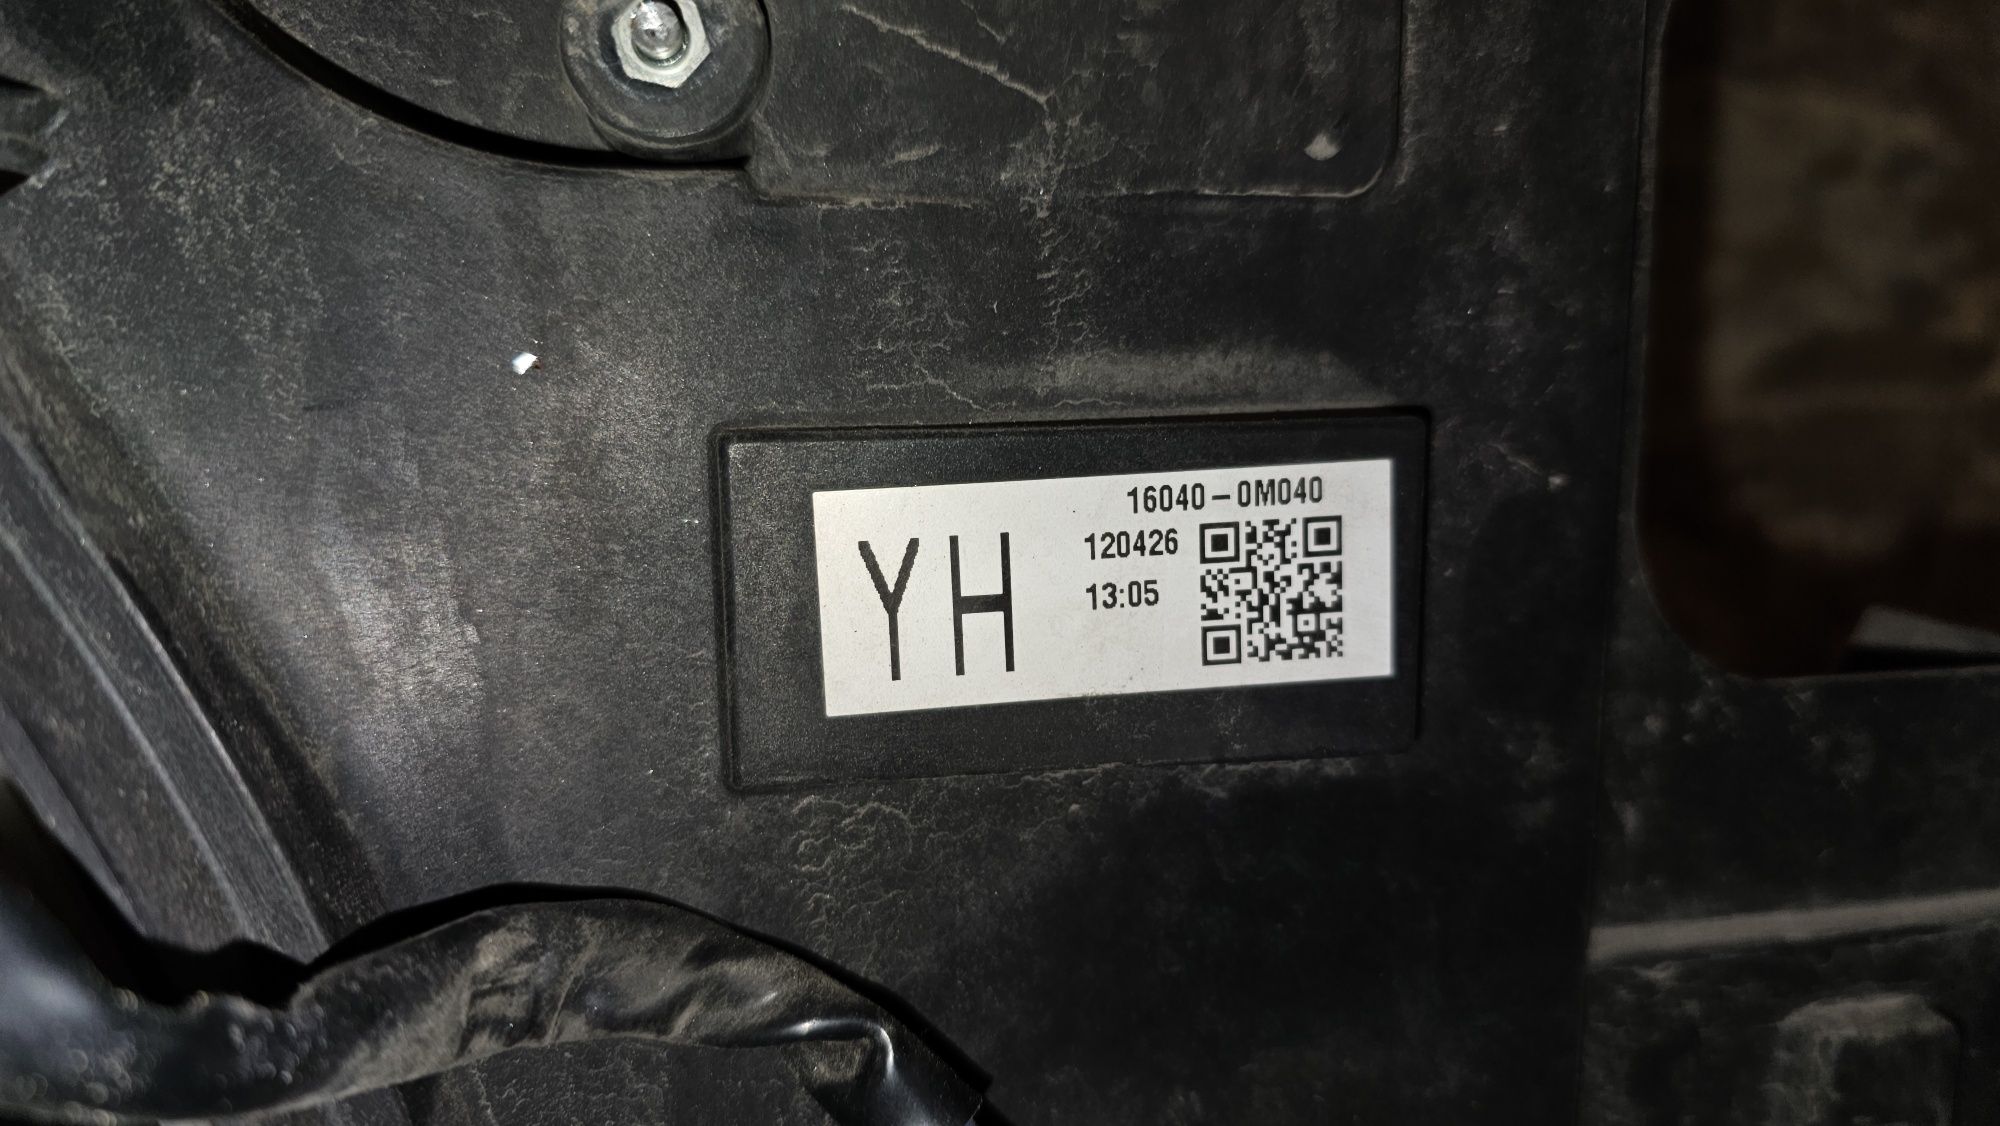 Фар и радиатор за toyota yaris hybrid 2012 до 2017